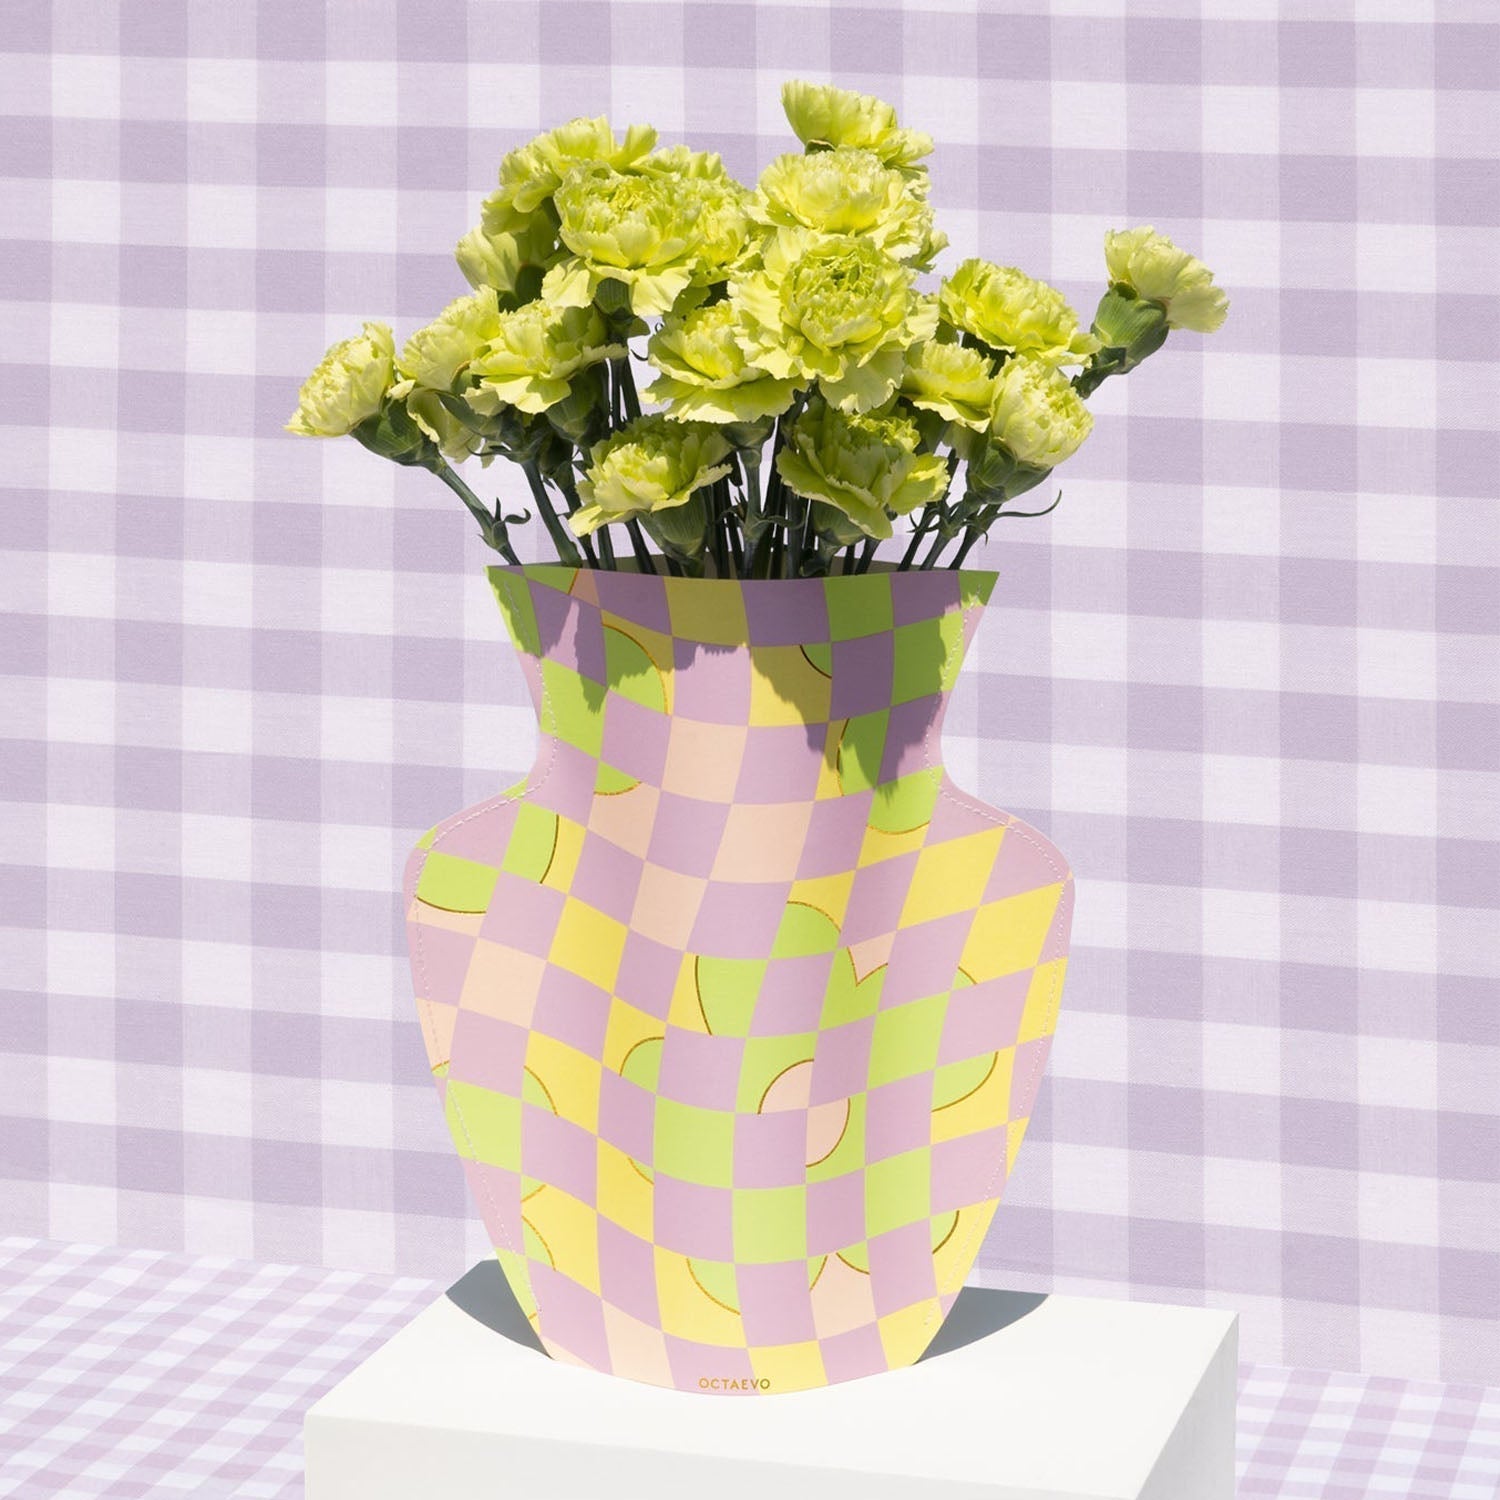 Paper Vase Picnic by OCTAEVO